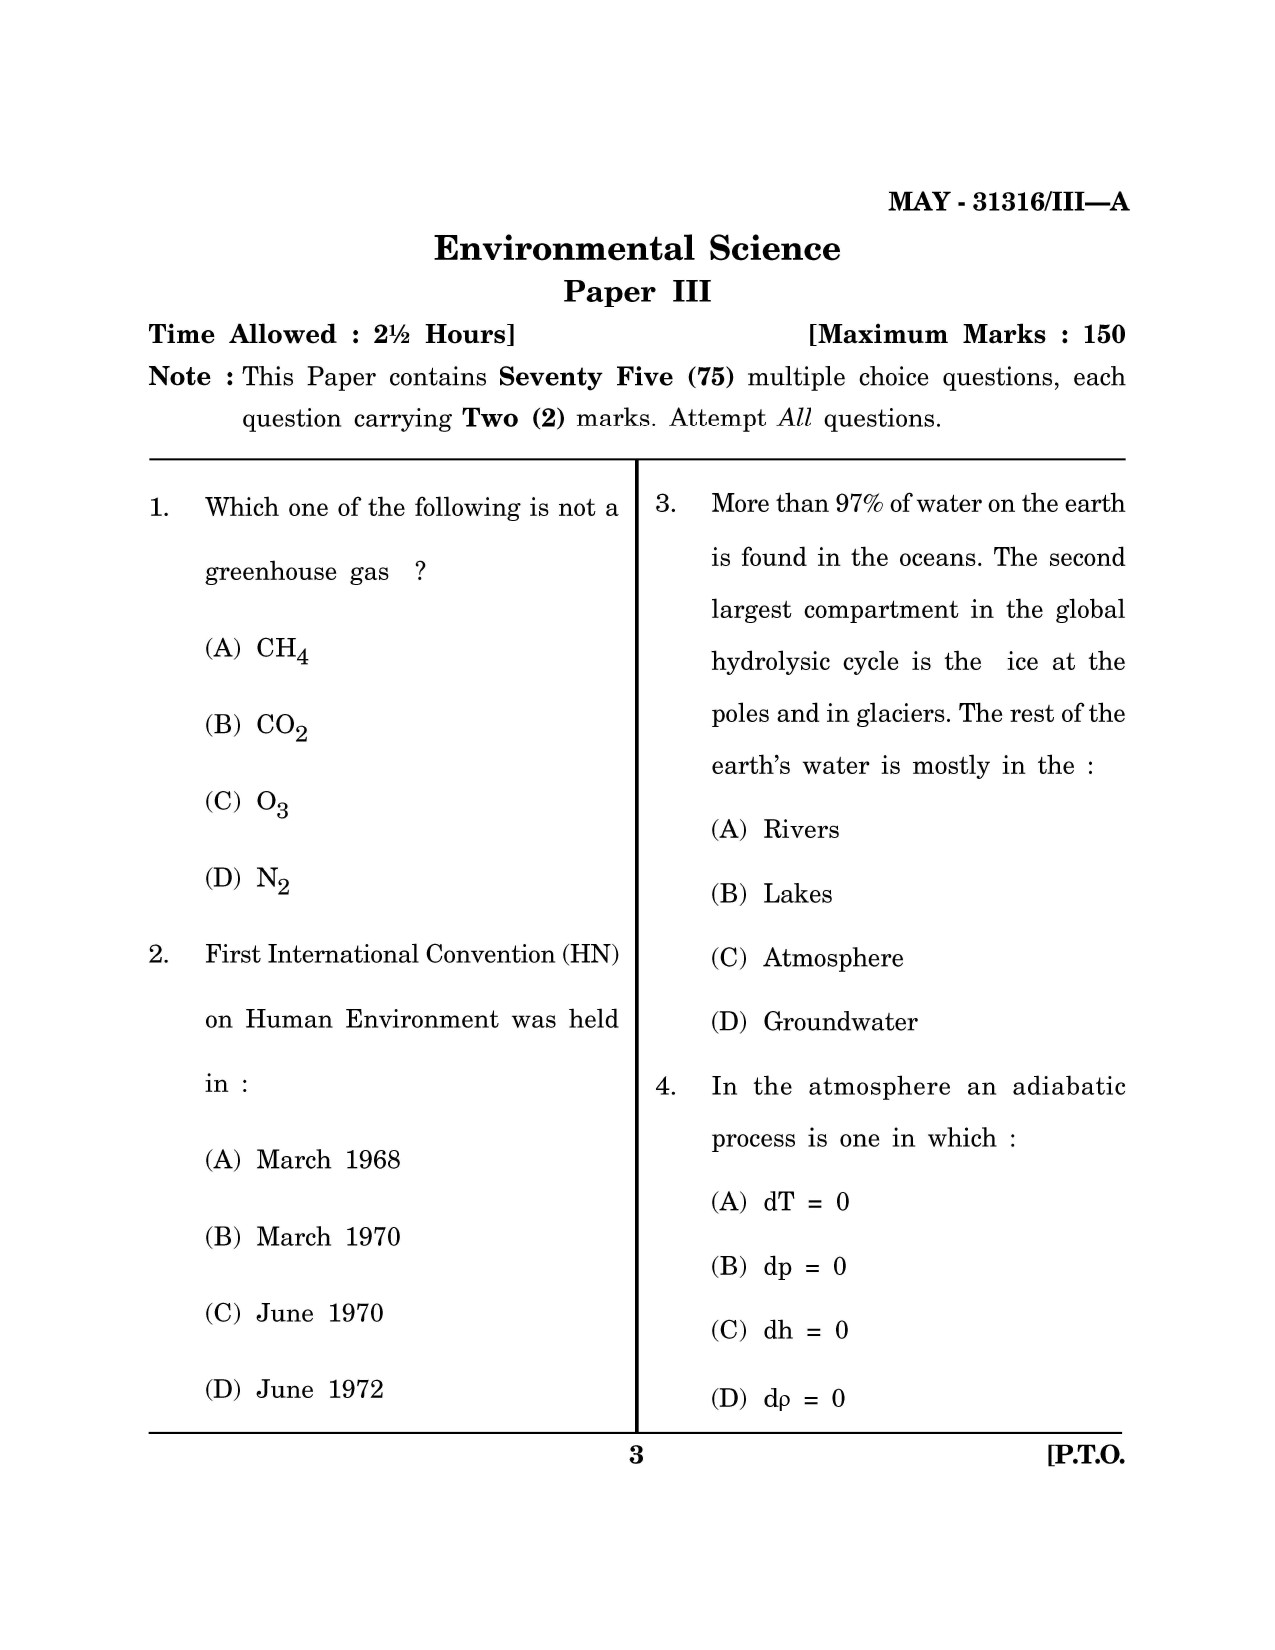 Maharashtra SET Environmental Sciences Question Paper III May 2016 2